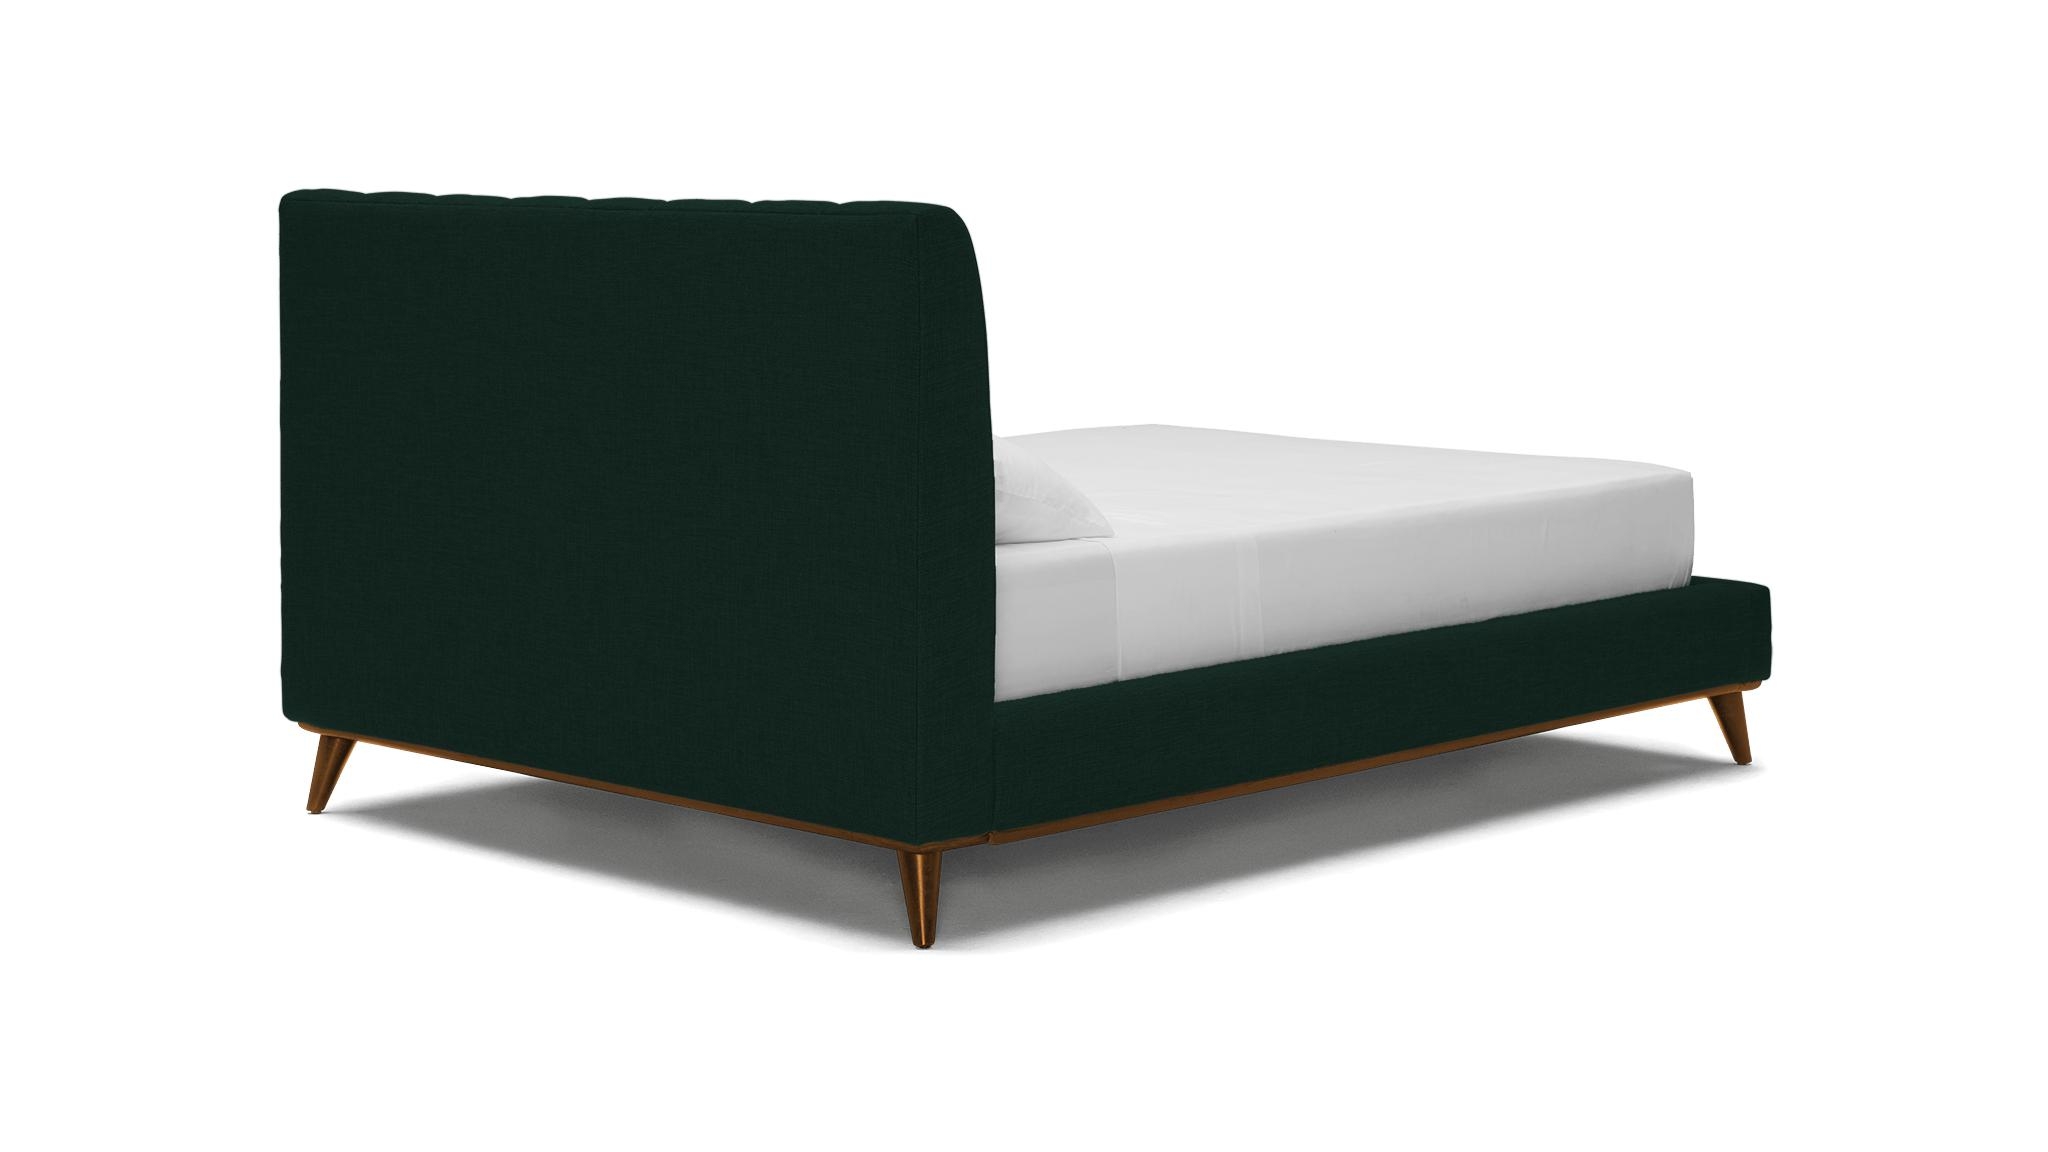 Green Hughes Mid Century Modern Bed - Royale Evergreen - Mocha - Queen - Image 3